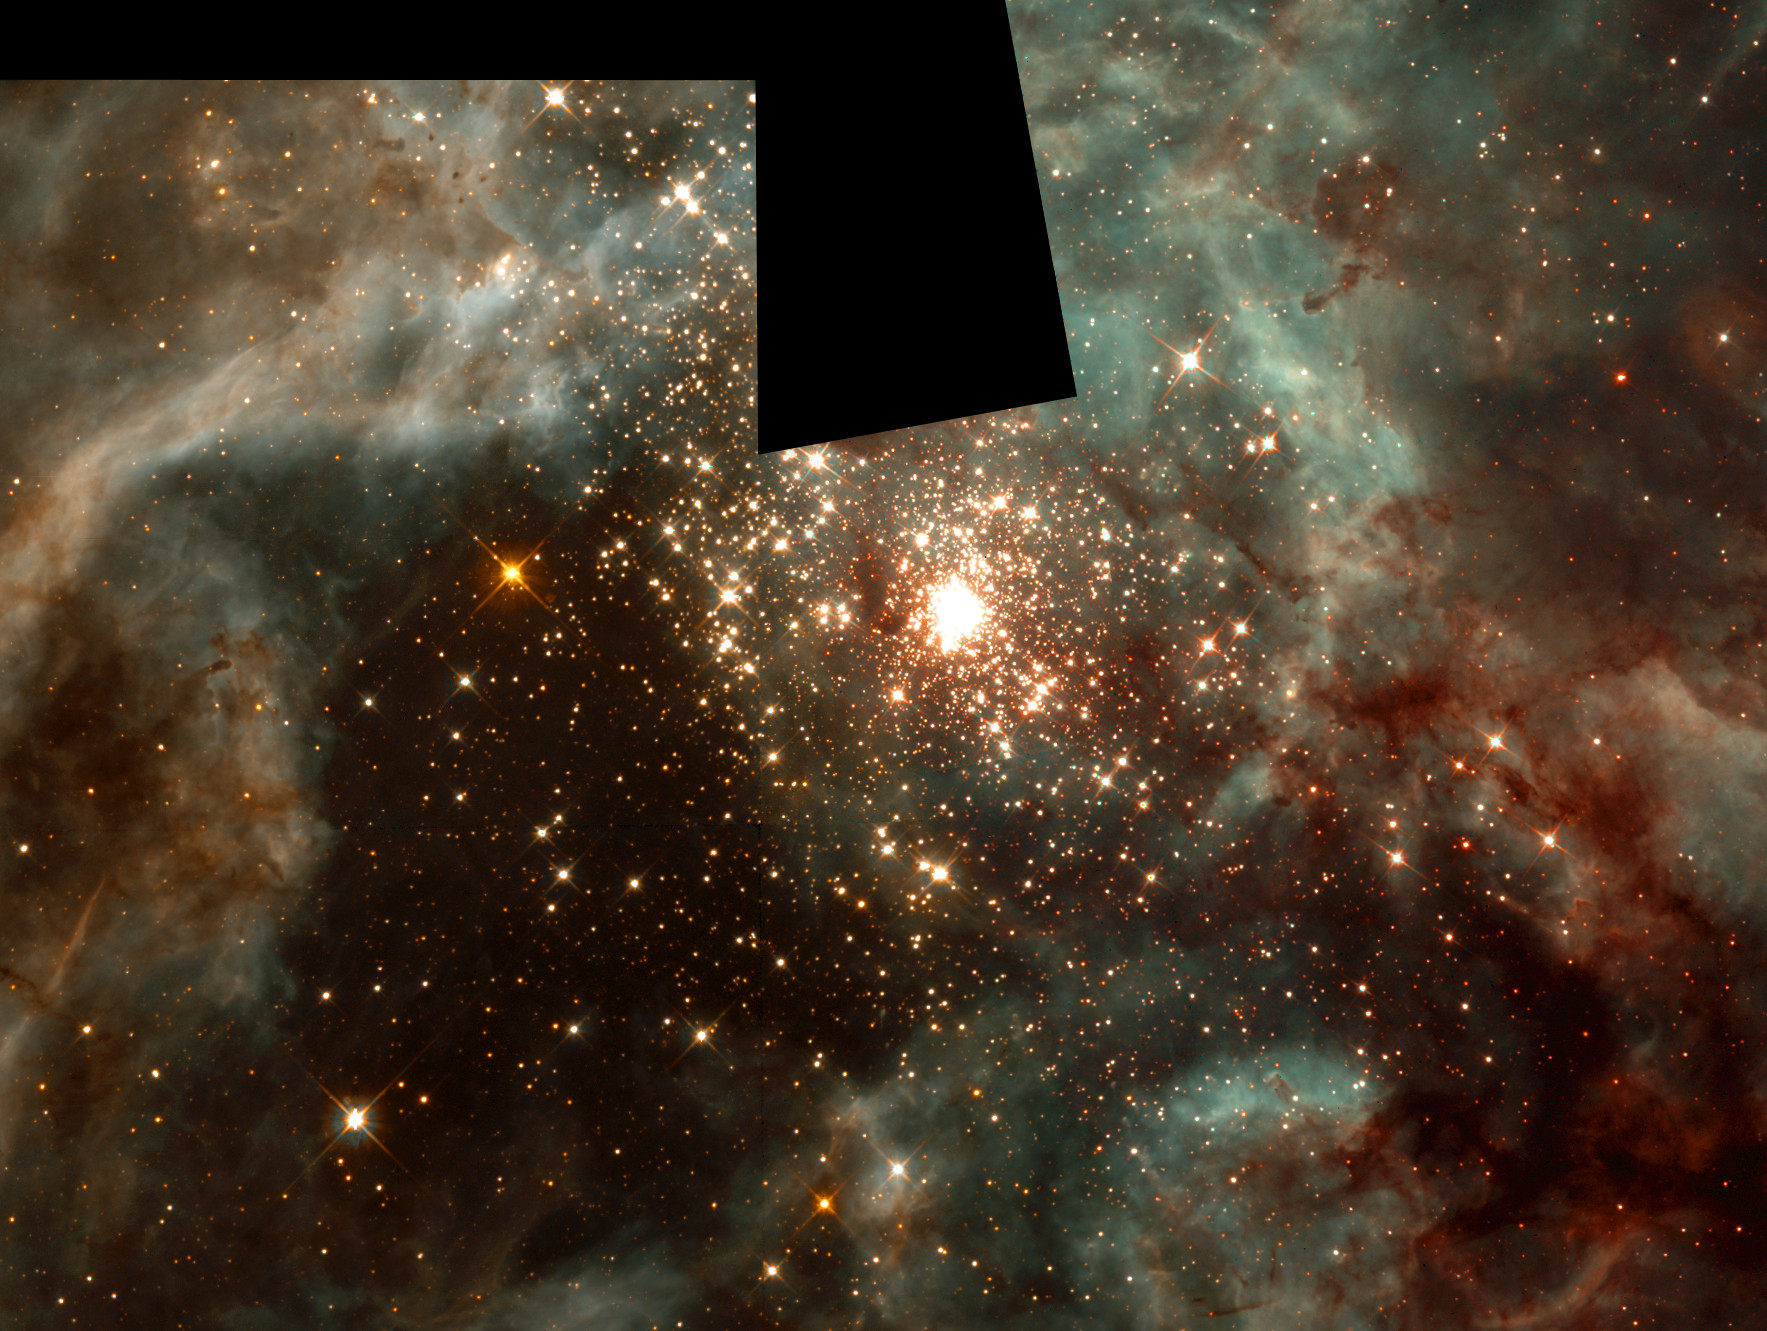 Apod: 2005 December 11 - R136: The Massive Stars Of 30 Doradus  Apod Nasa Calendar View